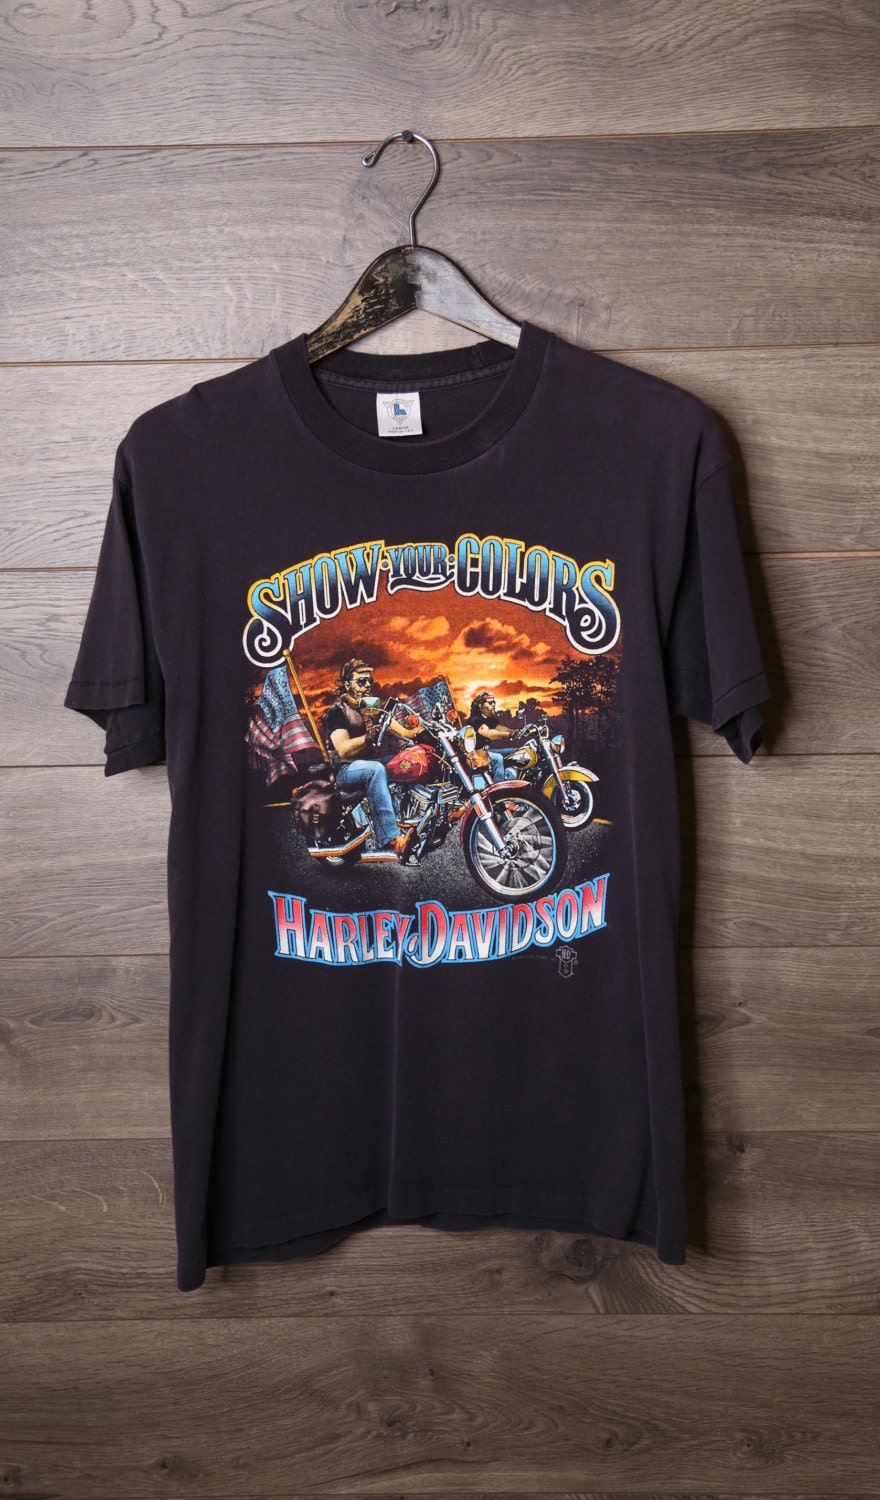 Vintage Harley Davidson t shirt